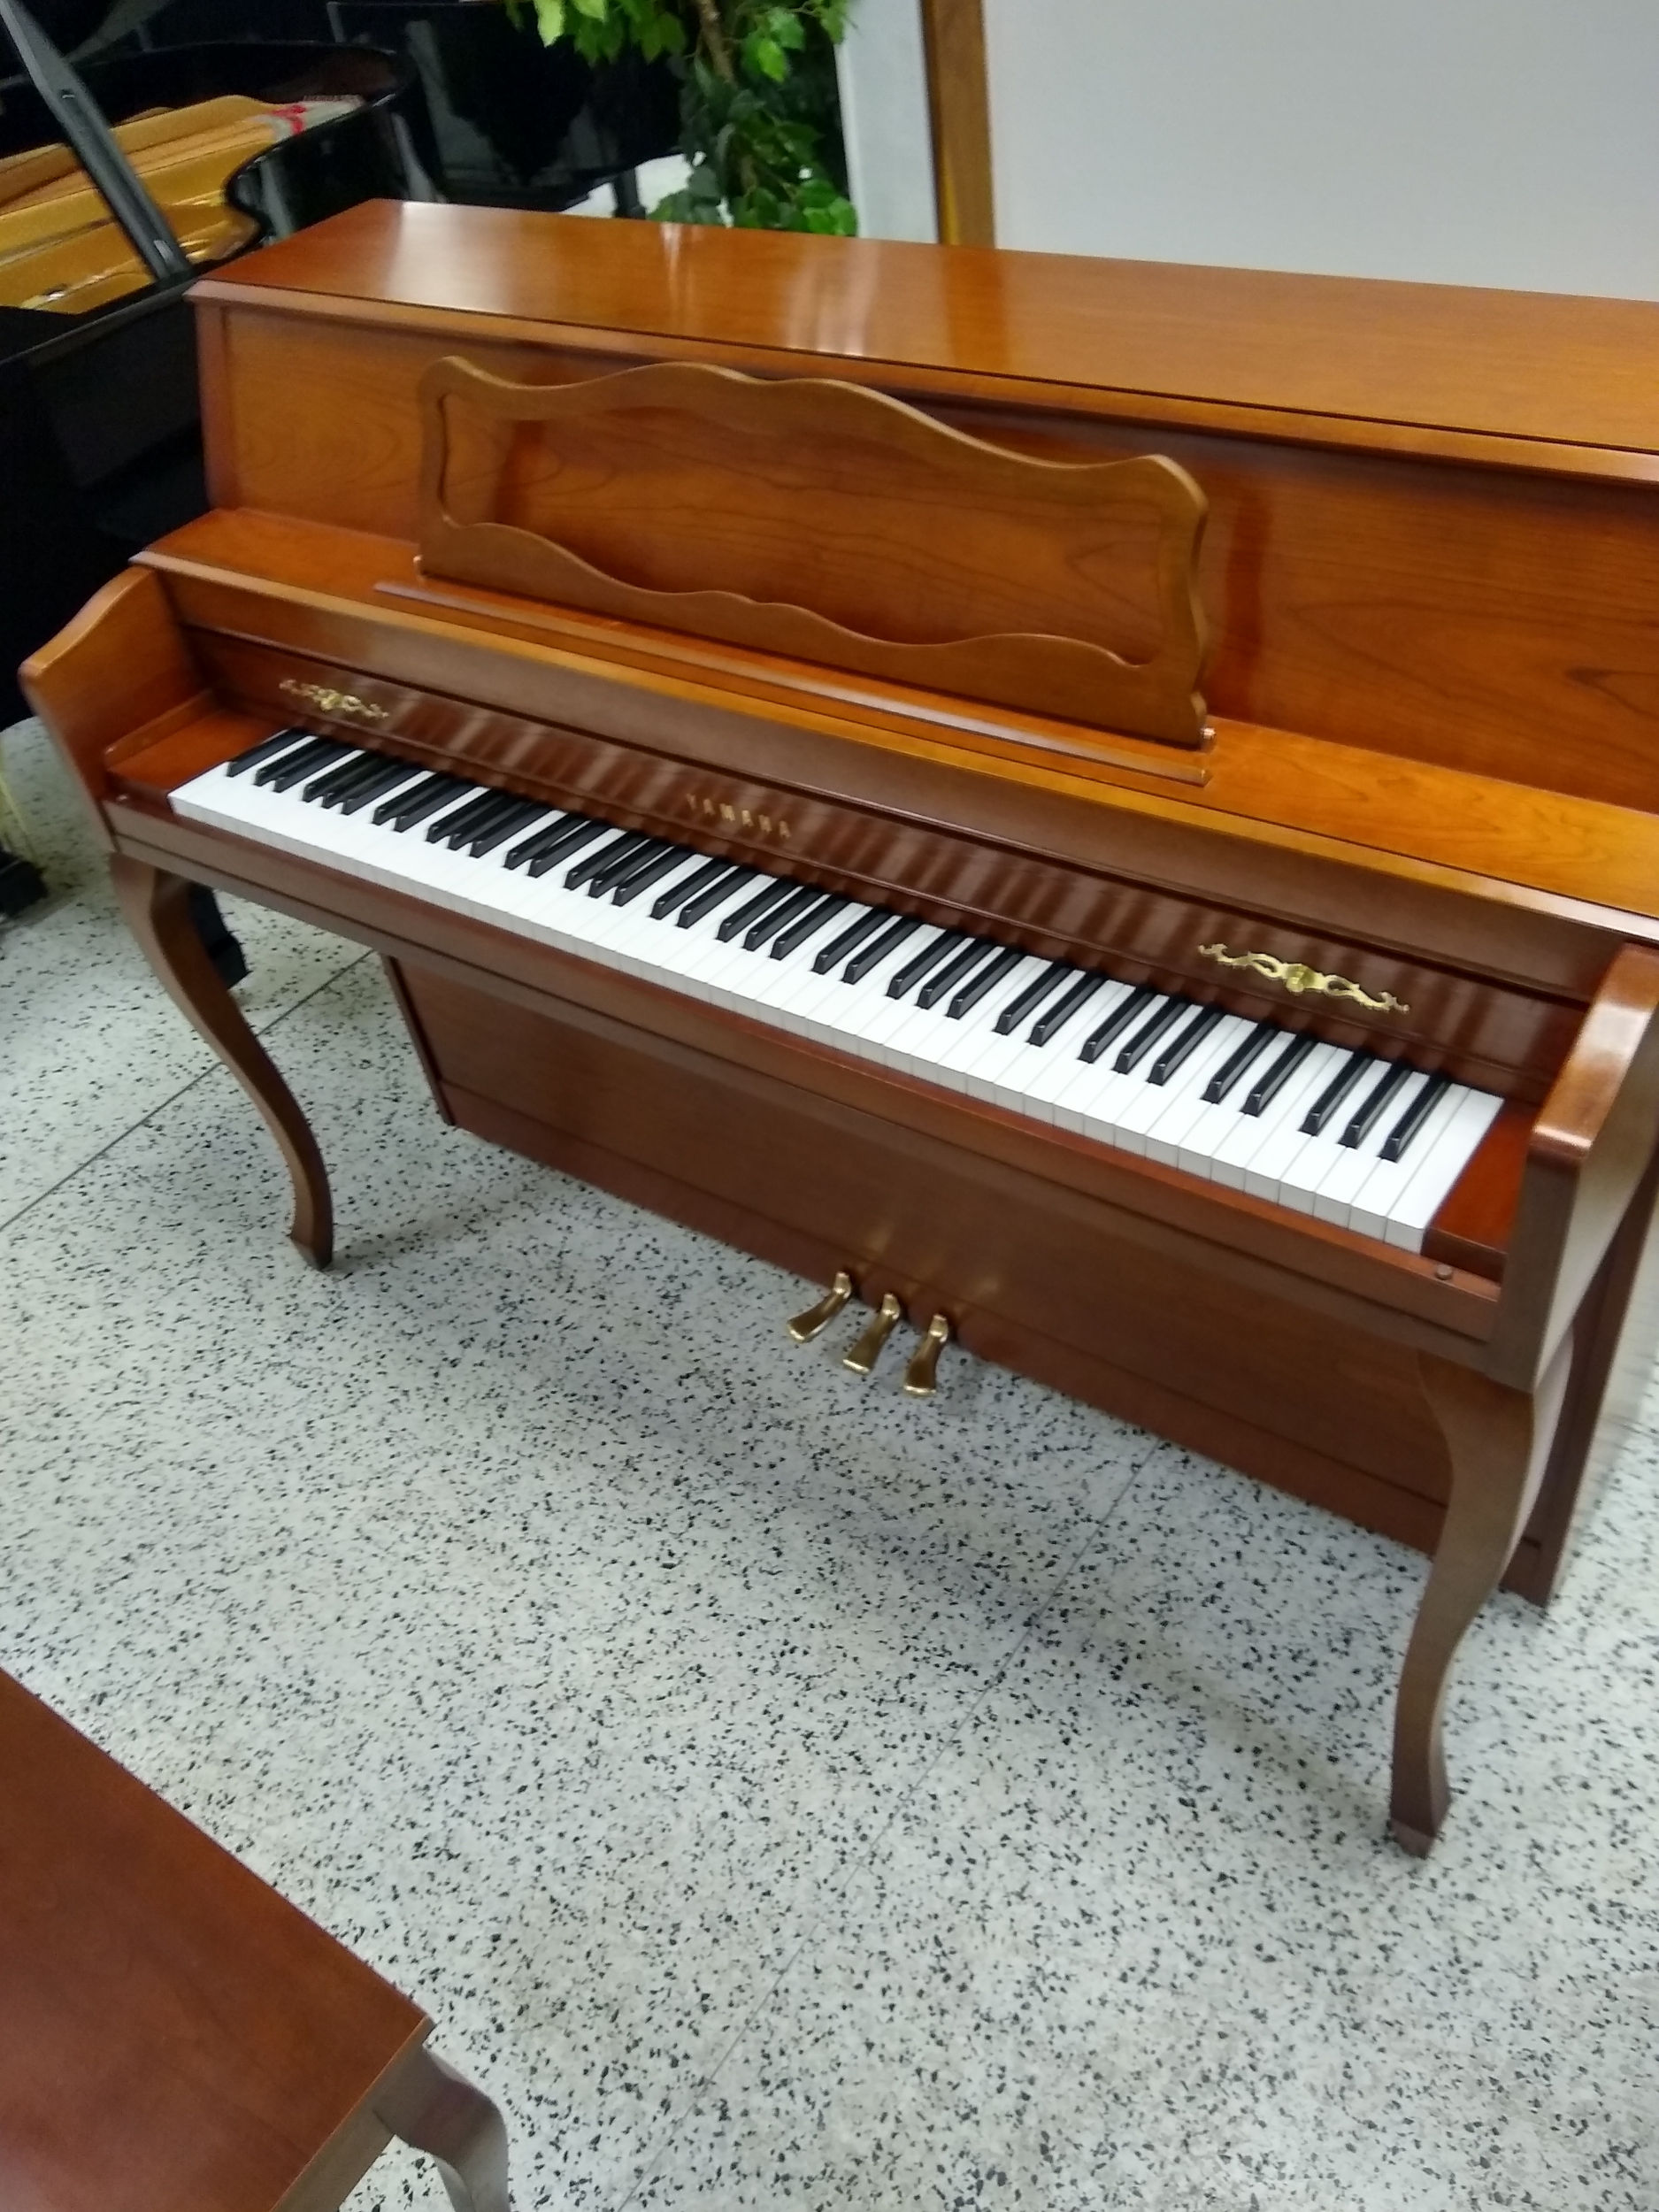 Yamaha Professional Designer Piano